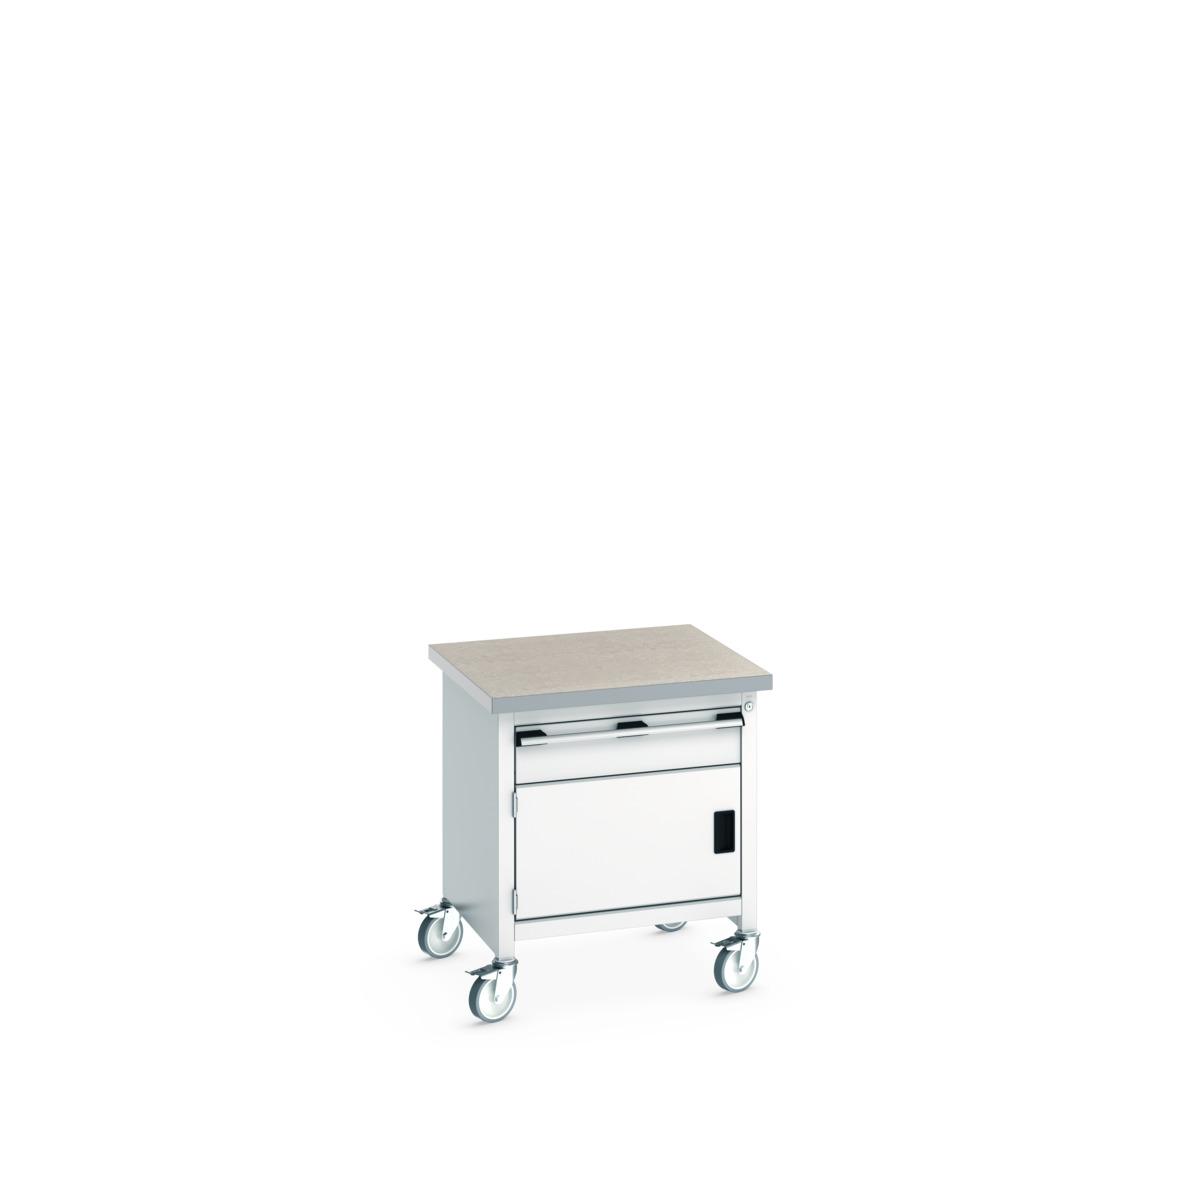 41002090.16V - cubio mobile storage bench (lino)